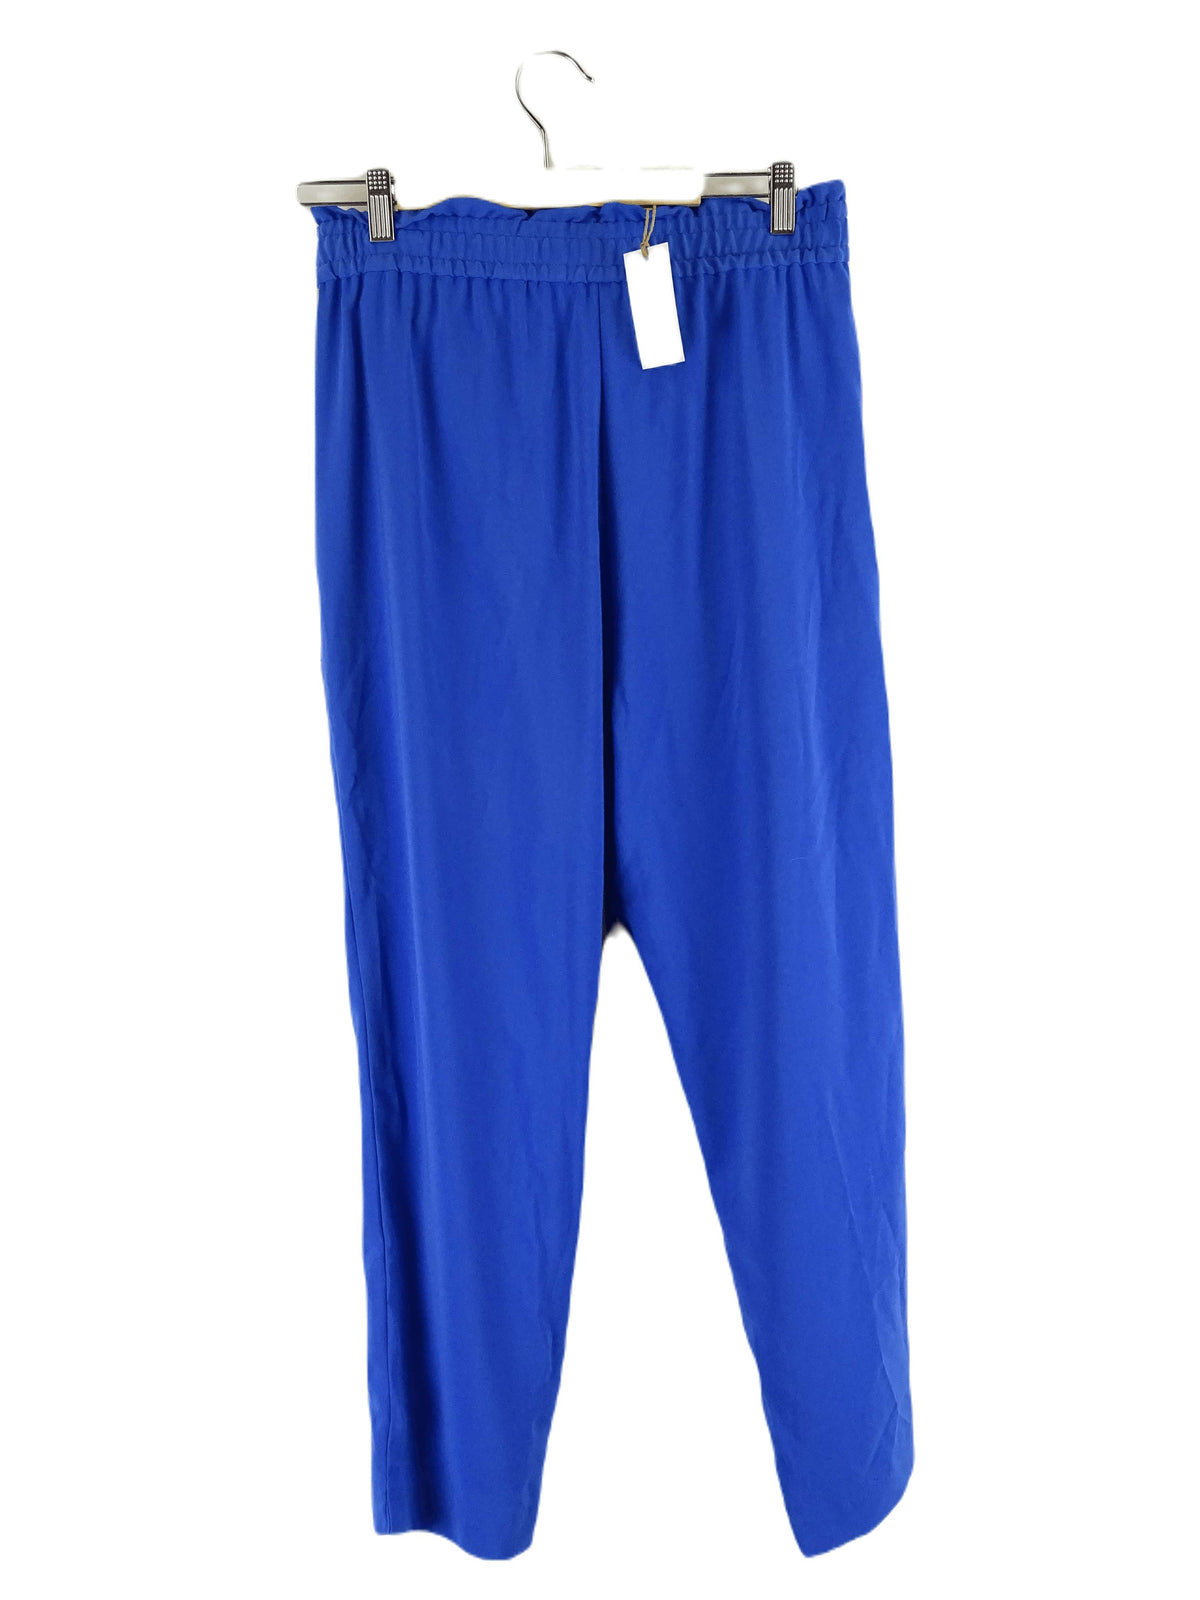 Zara Blue Pants 12